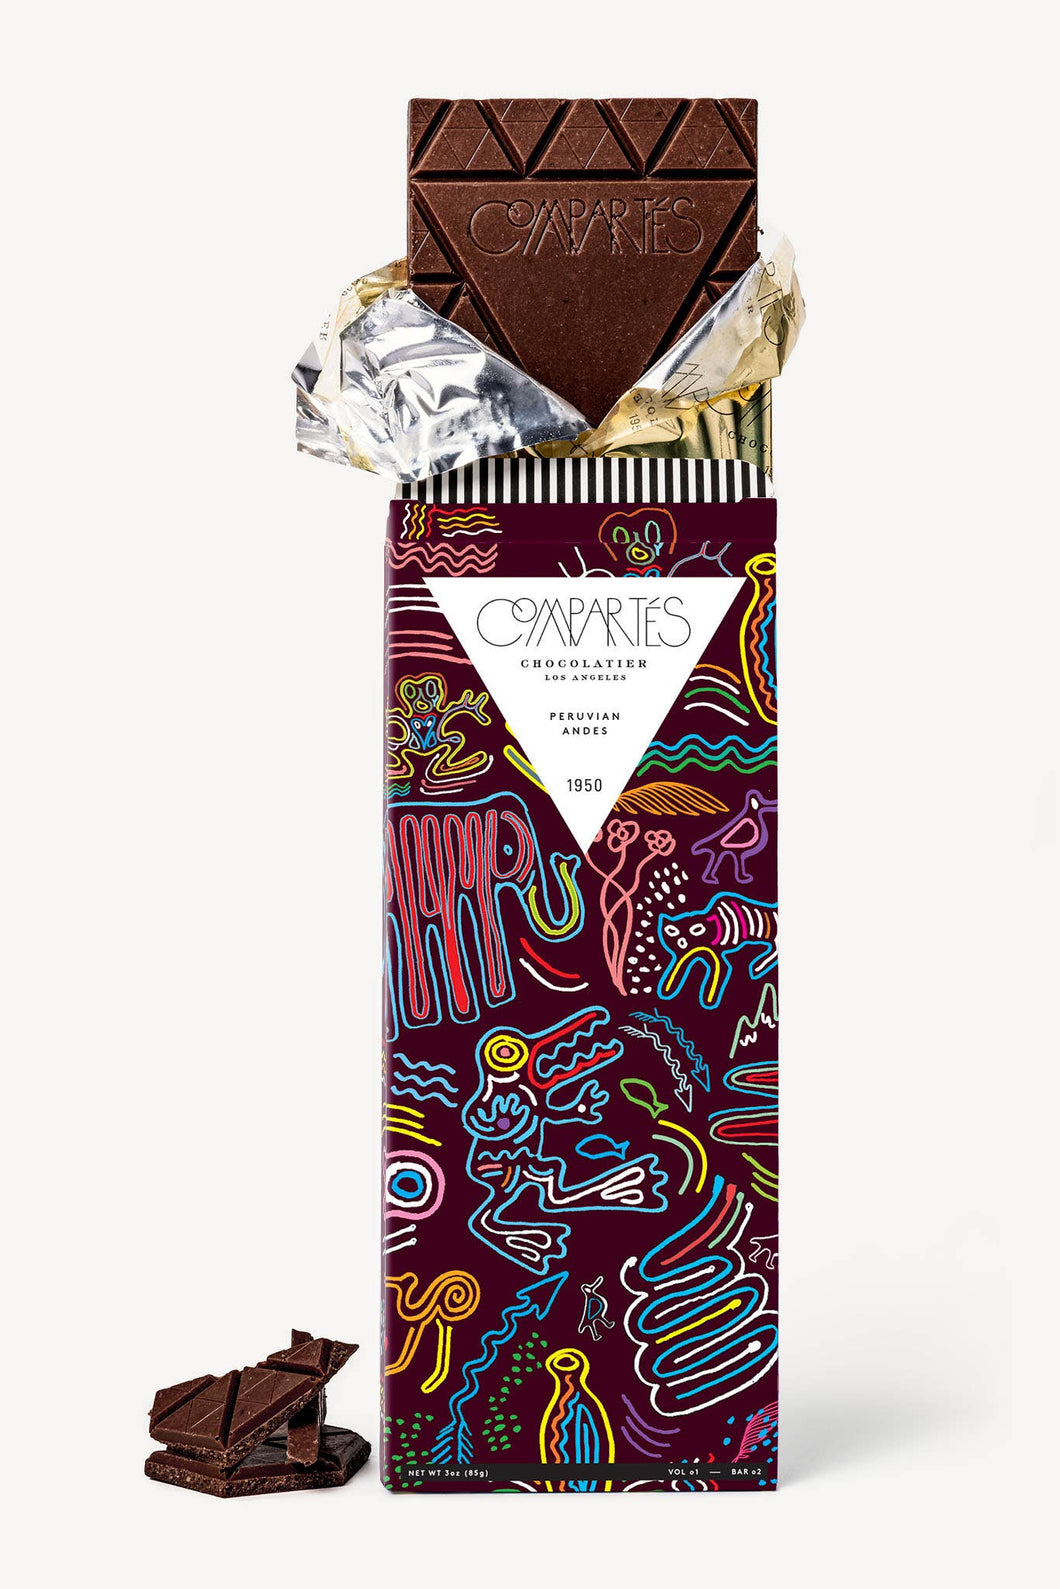 Compartes Chocolate - *NEW* Peruvian Andes - Single Origin Gourmet Chocolate Bar